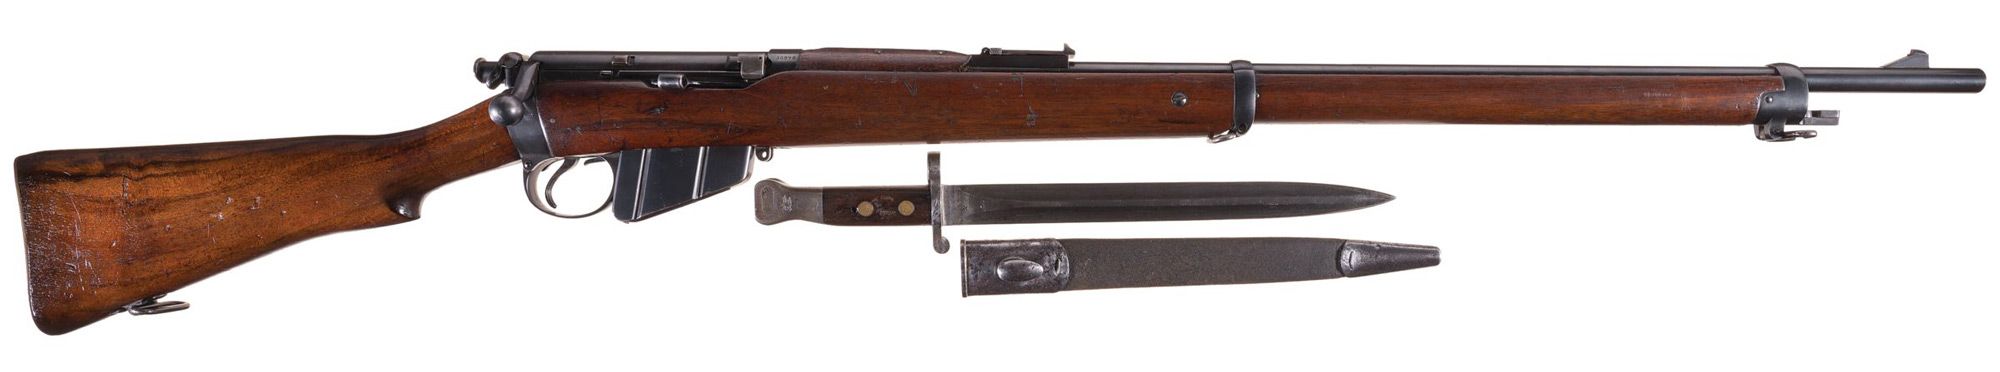 Lee-Enfield rifle